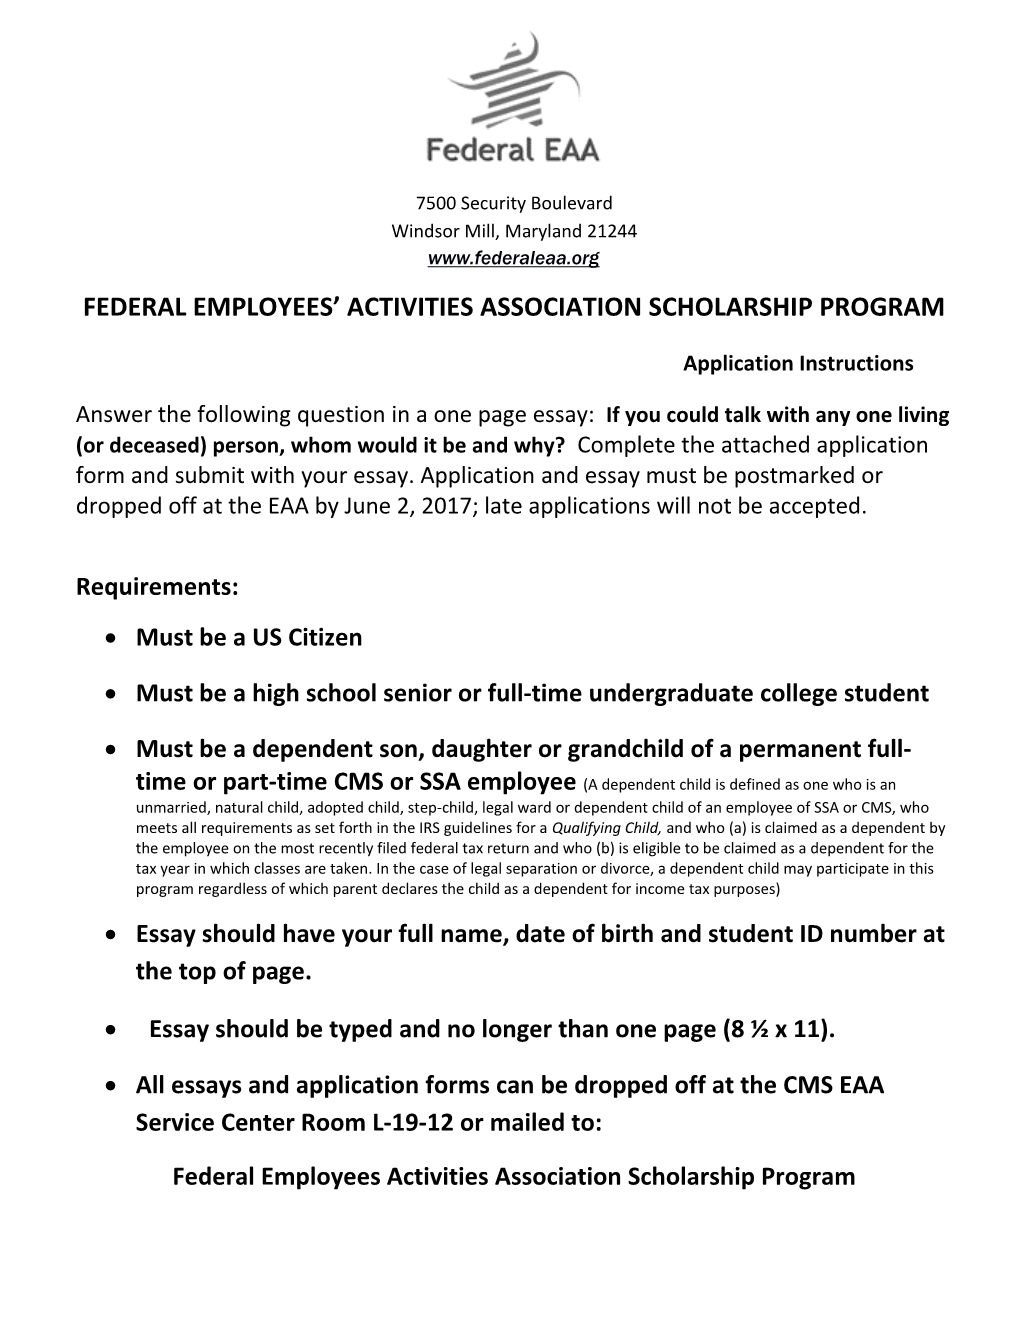 Federal Employees Activities Association Scholarship Program